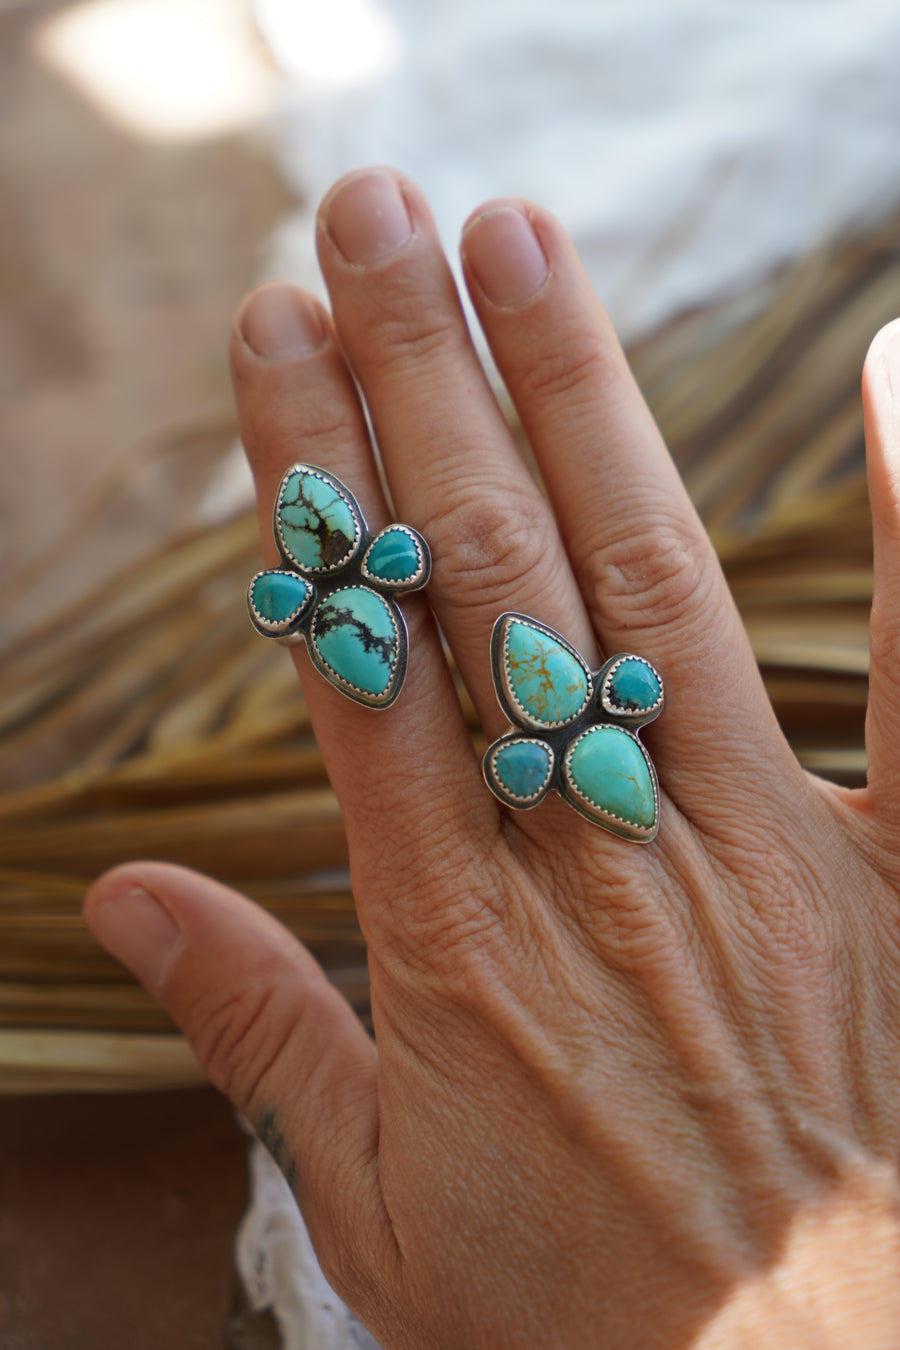 Hubei Turquoise Ring Size 7.5